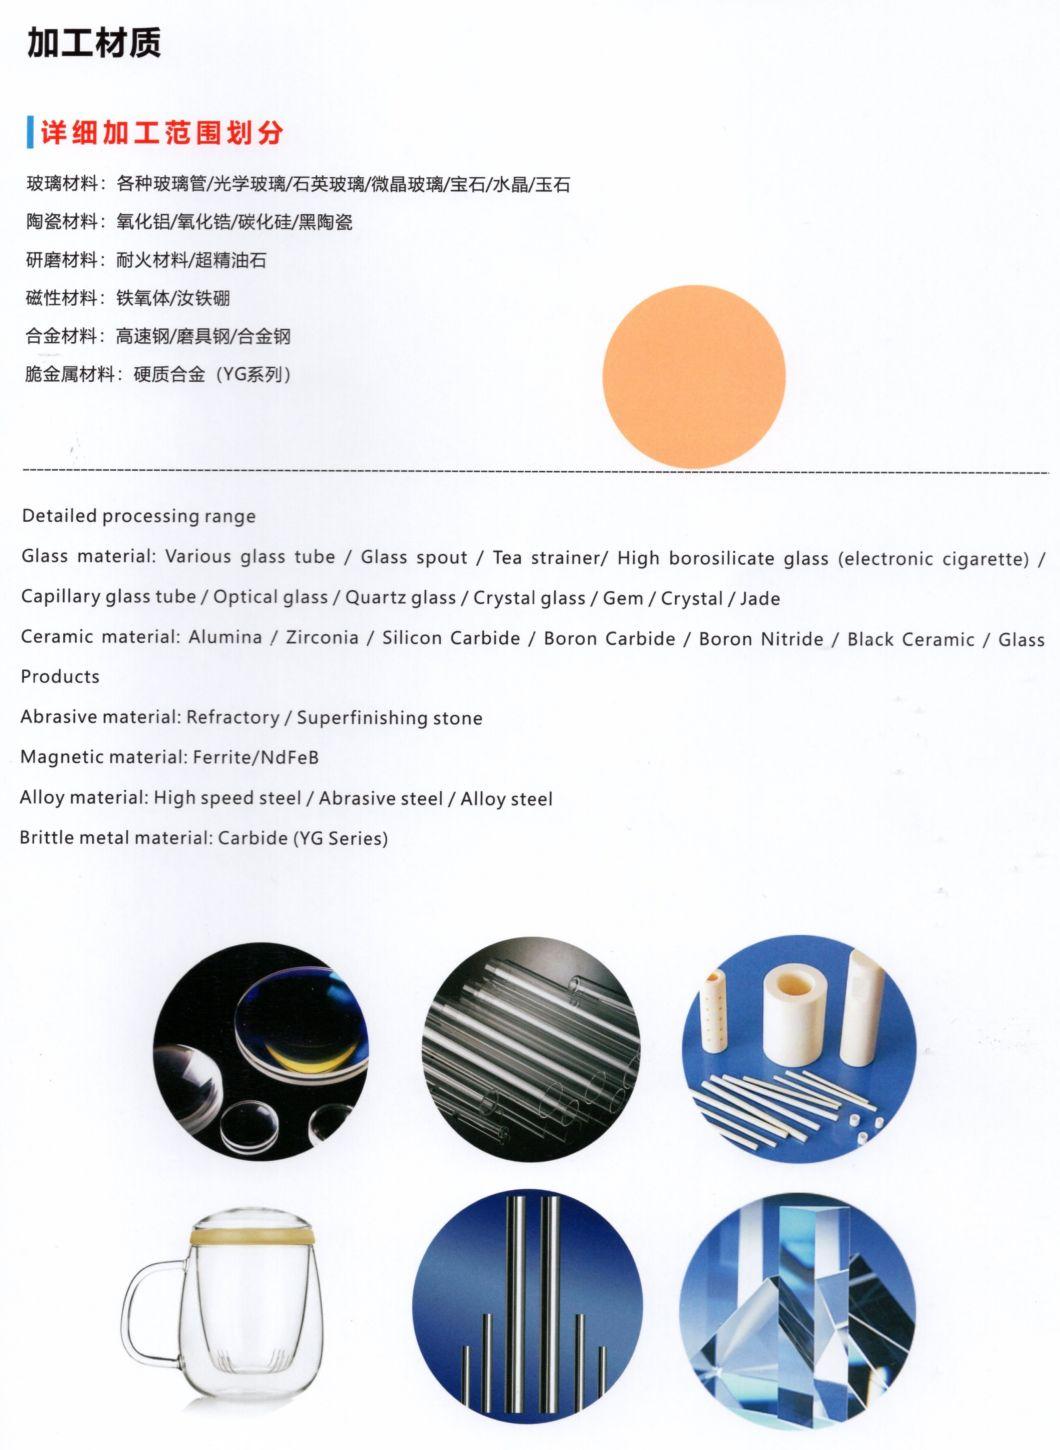 Metal Bonded Ultrathin Diamond Cutting Disc for Zirconia Ceramic